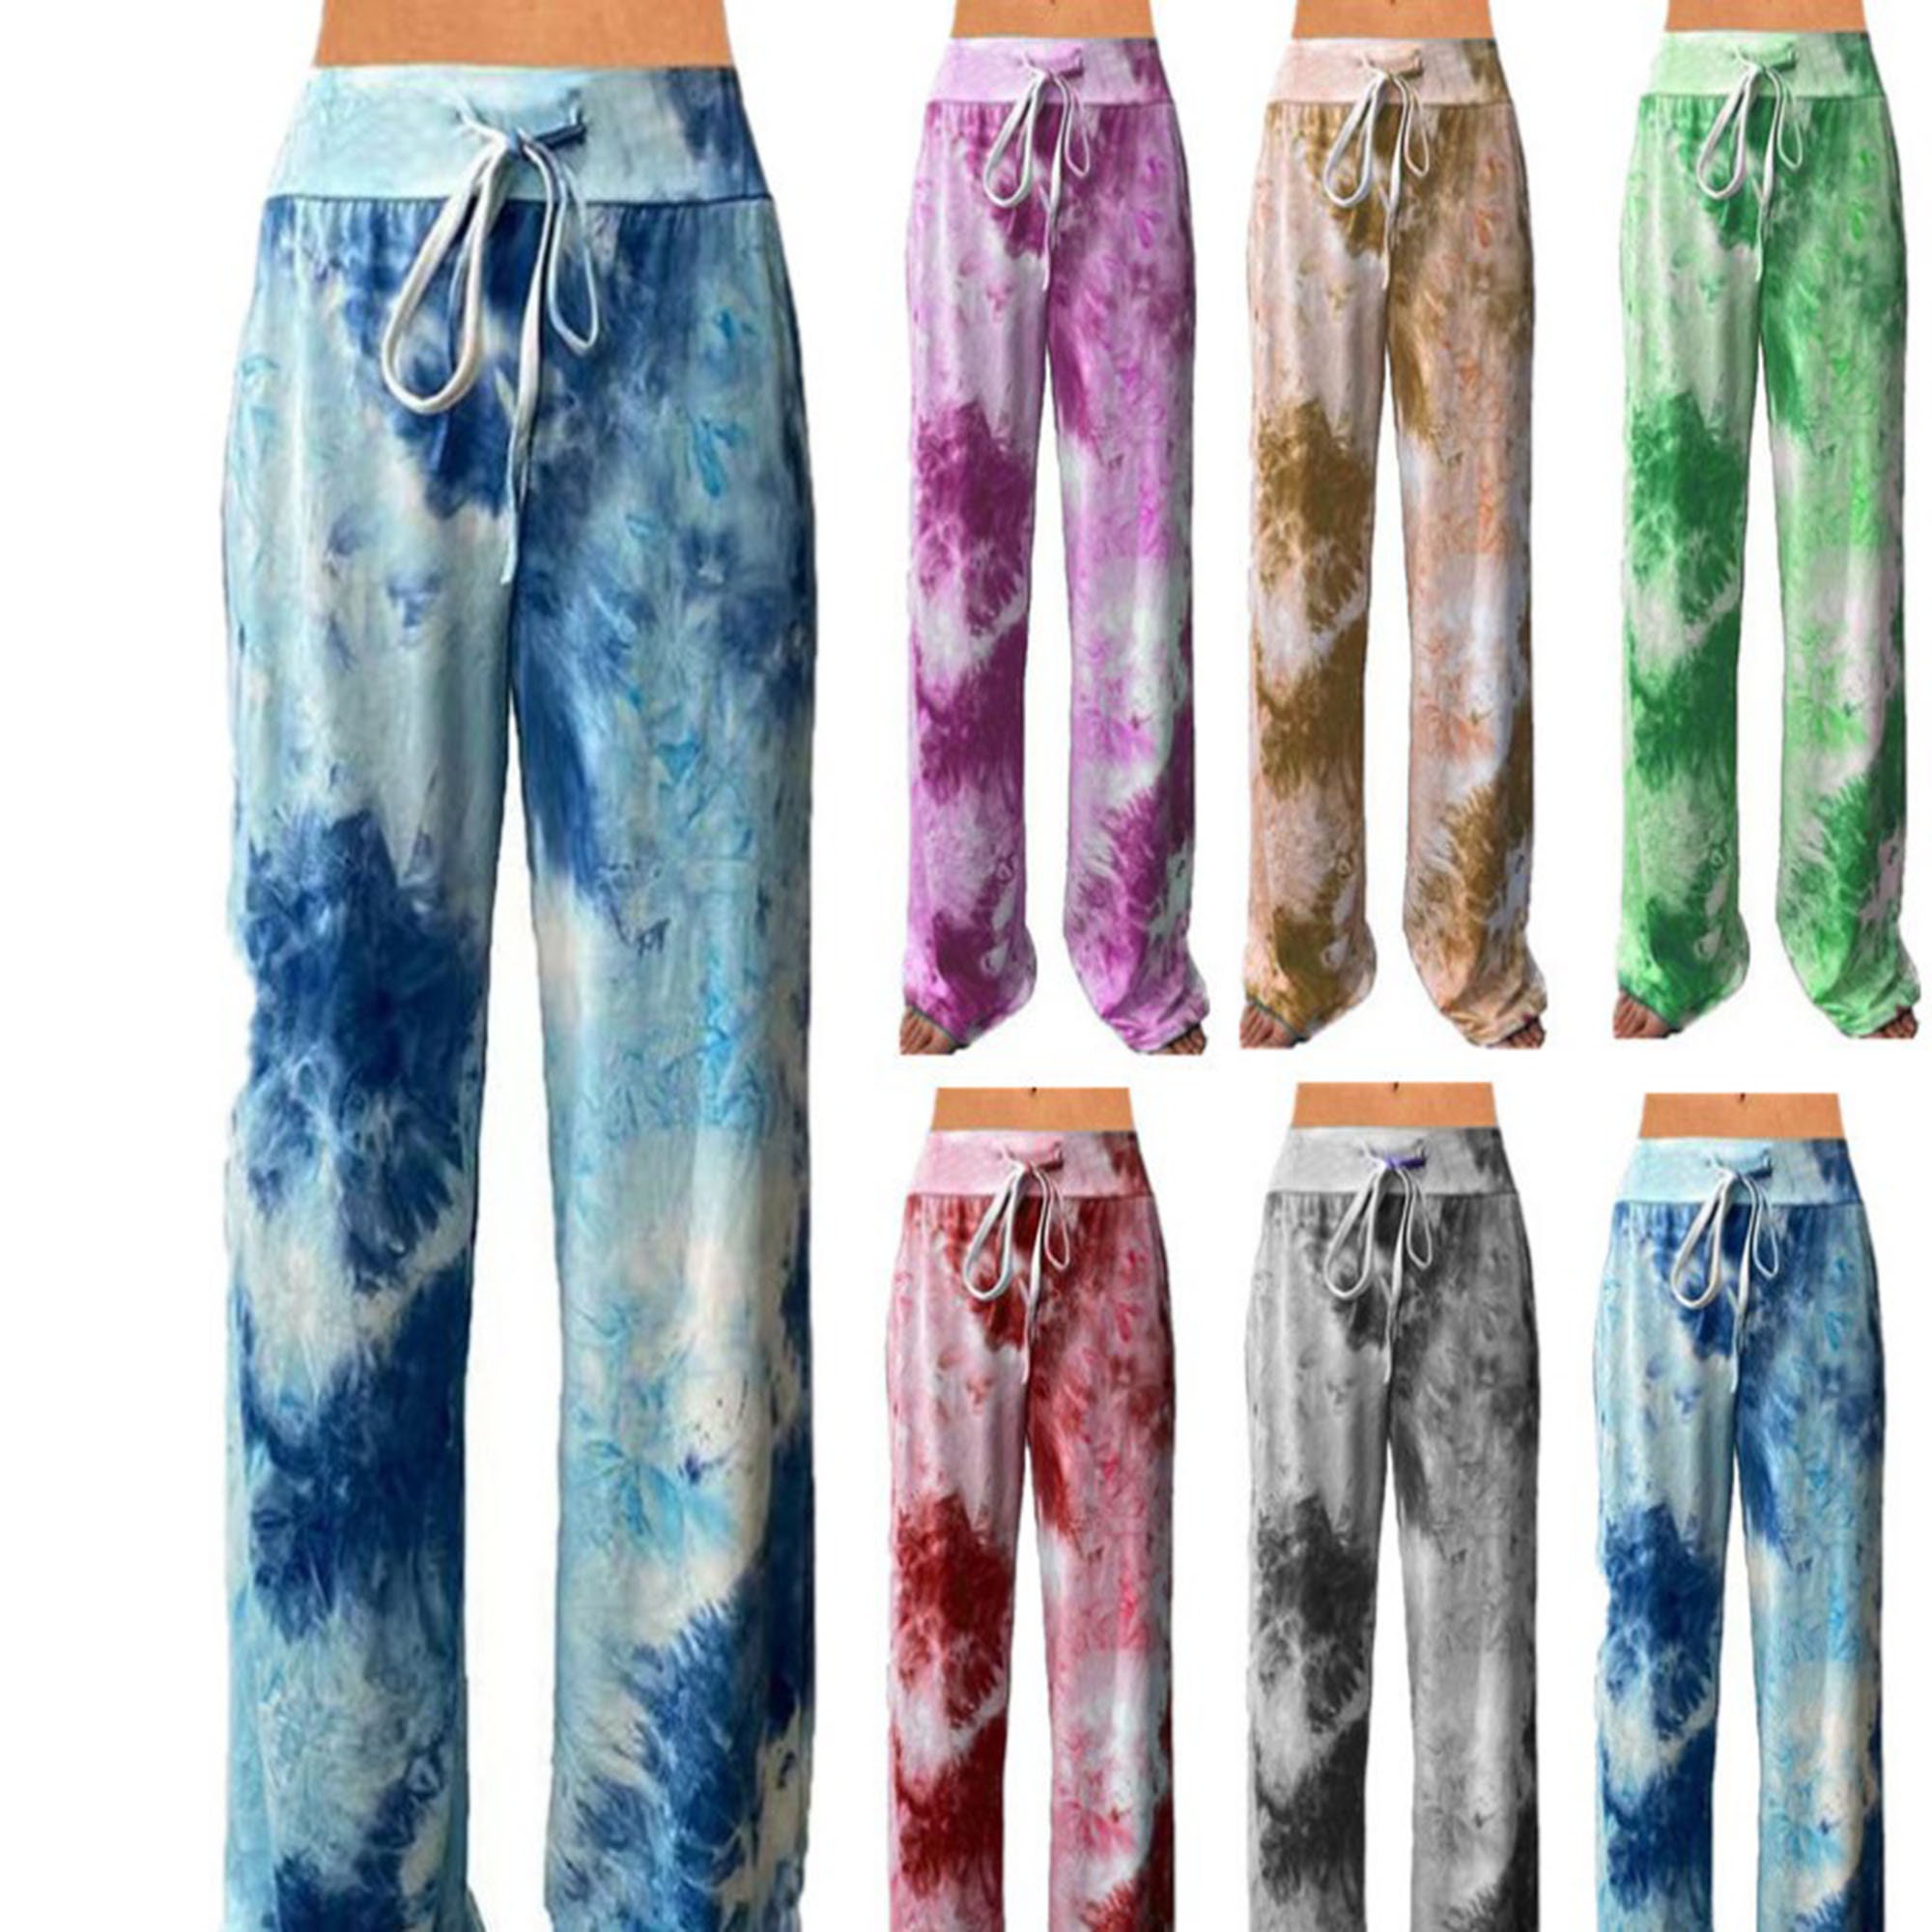 Polyester Spandex Tie-dye Printed Fabric Printed Leggings Yoga | Etsy